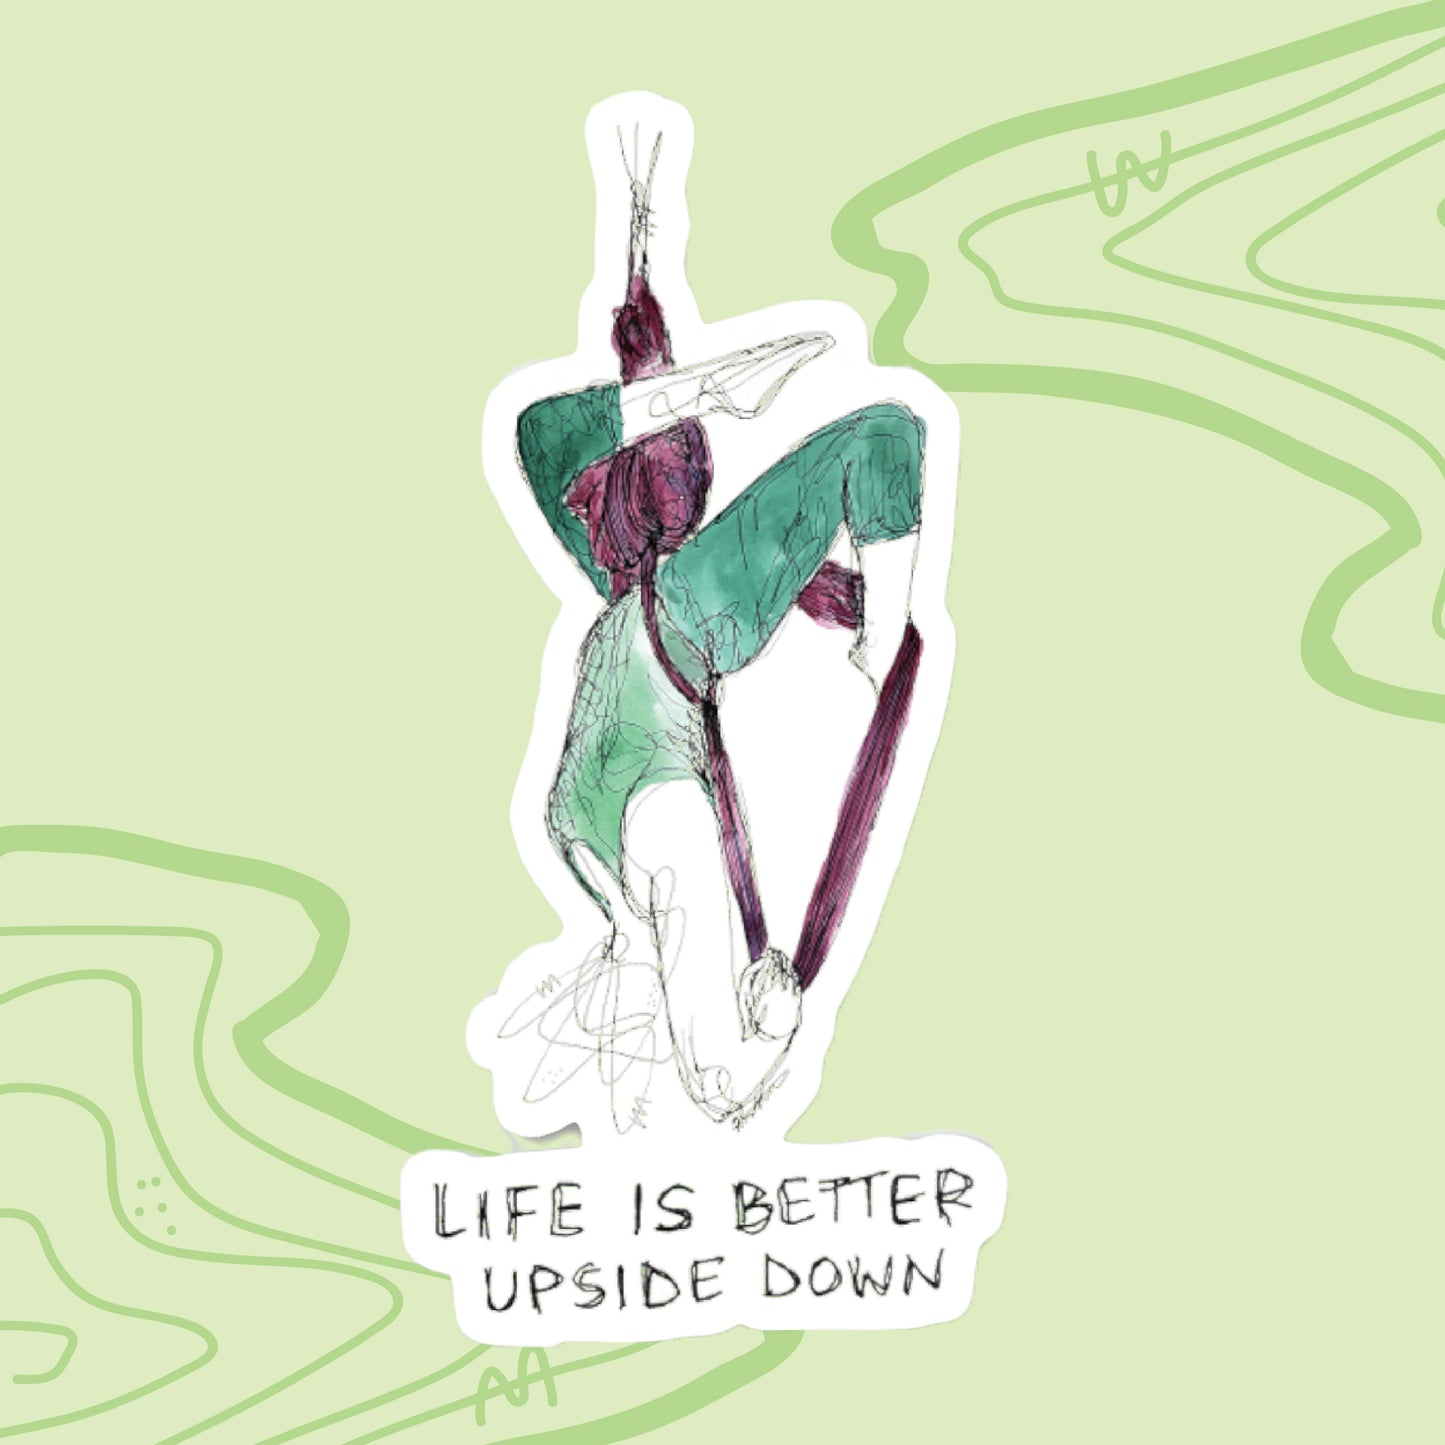 "Life is better upside down" Sticker